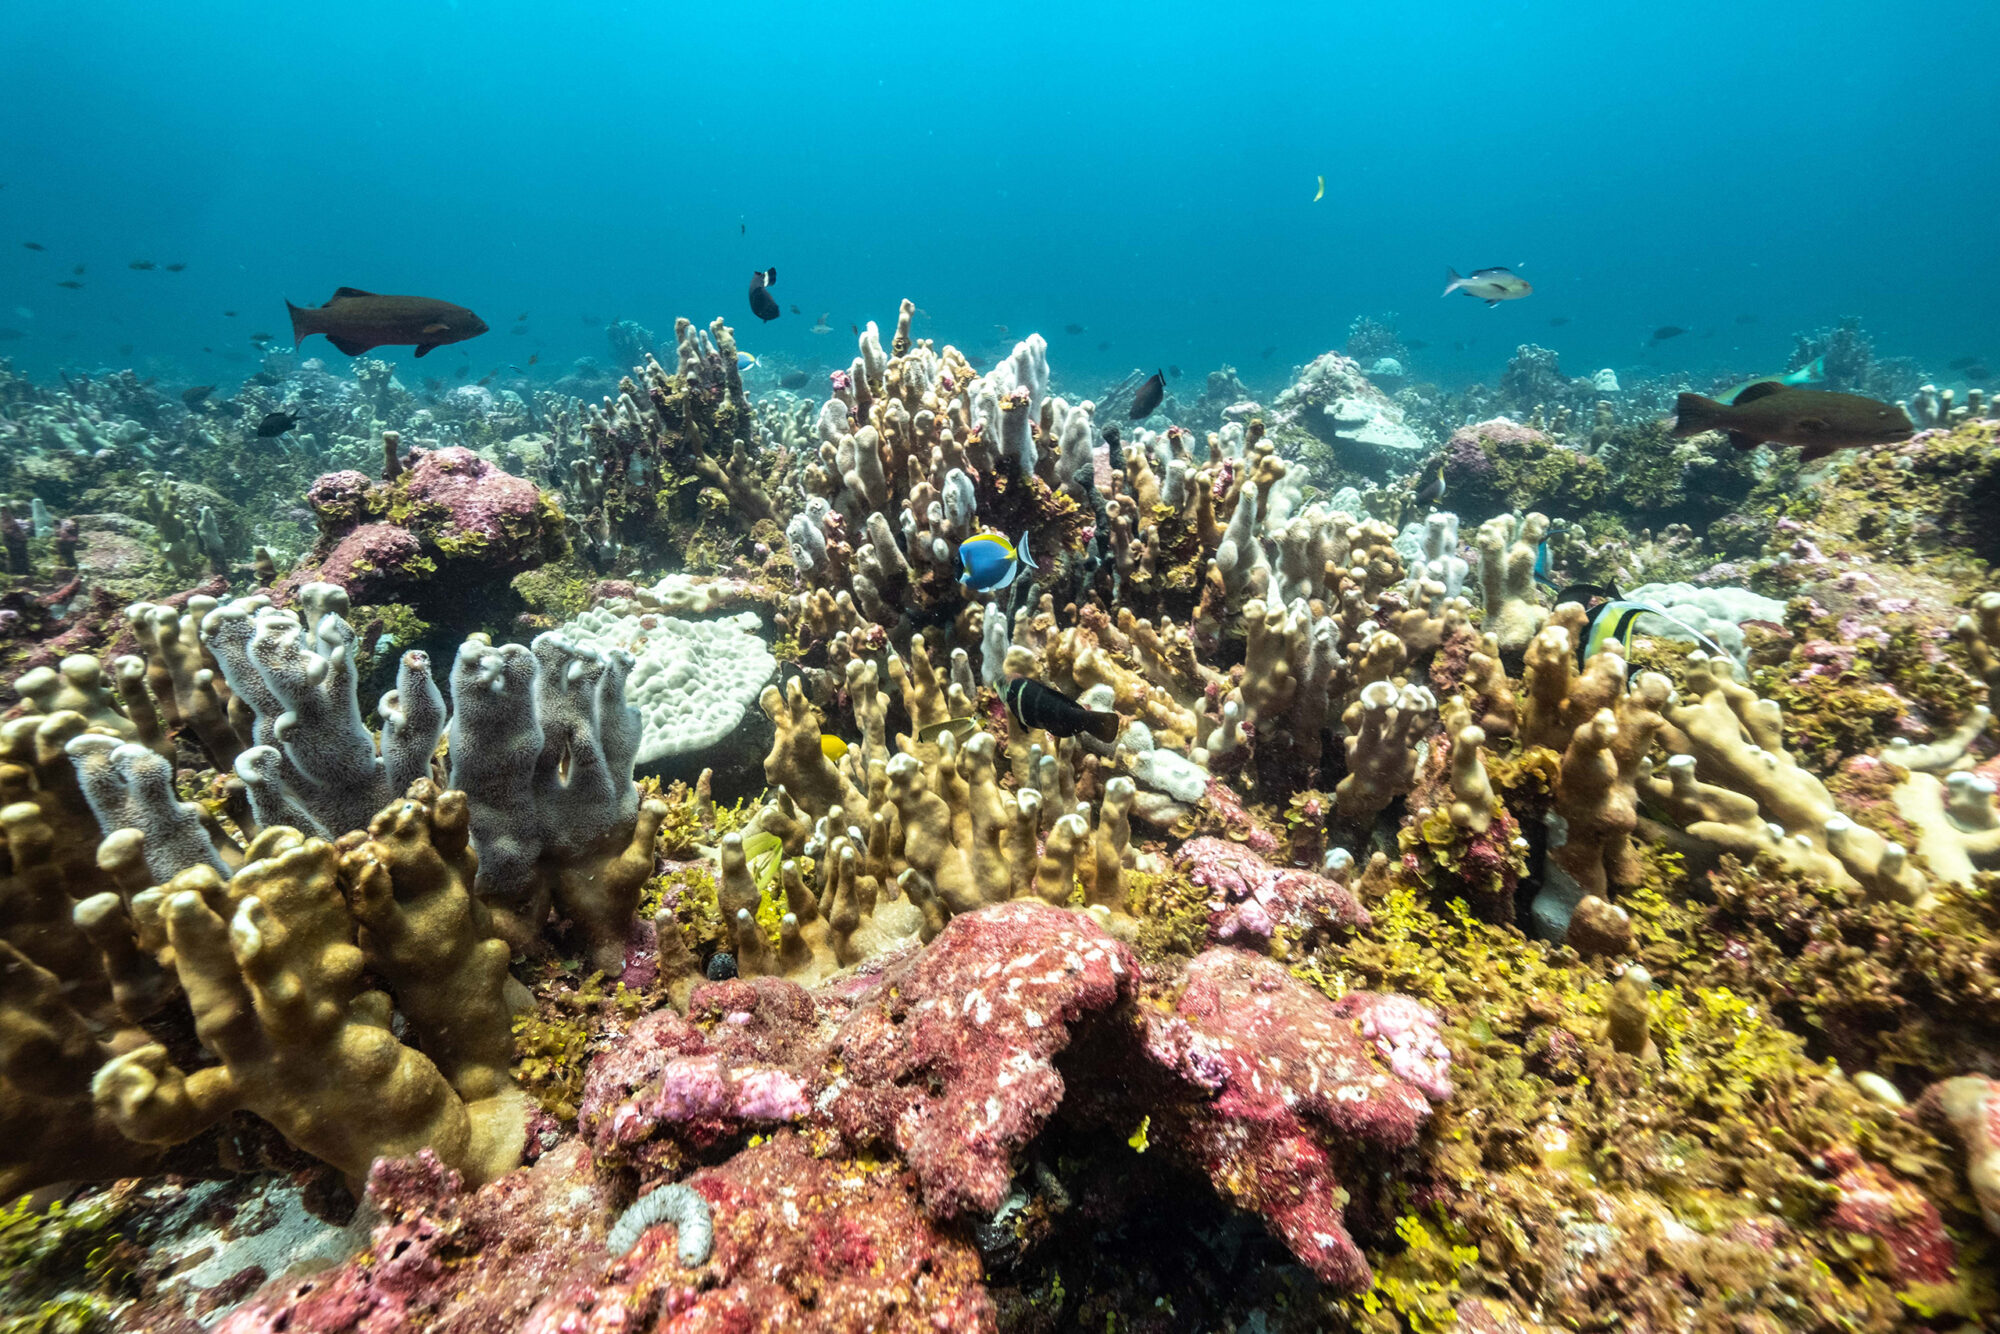 Corals at Saya De Malha Bank in the Indian Ocean